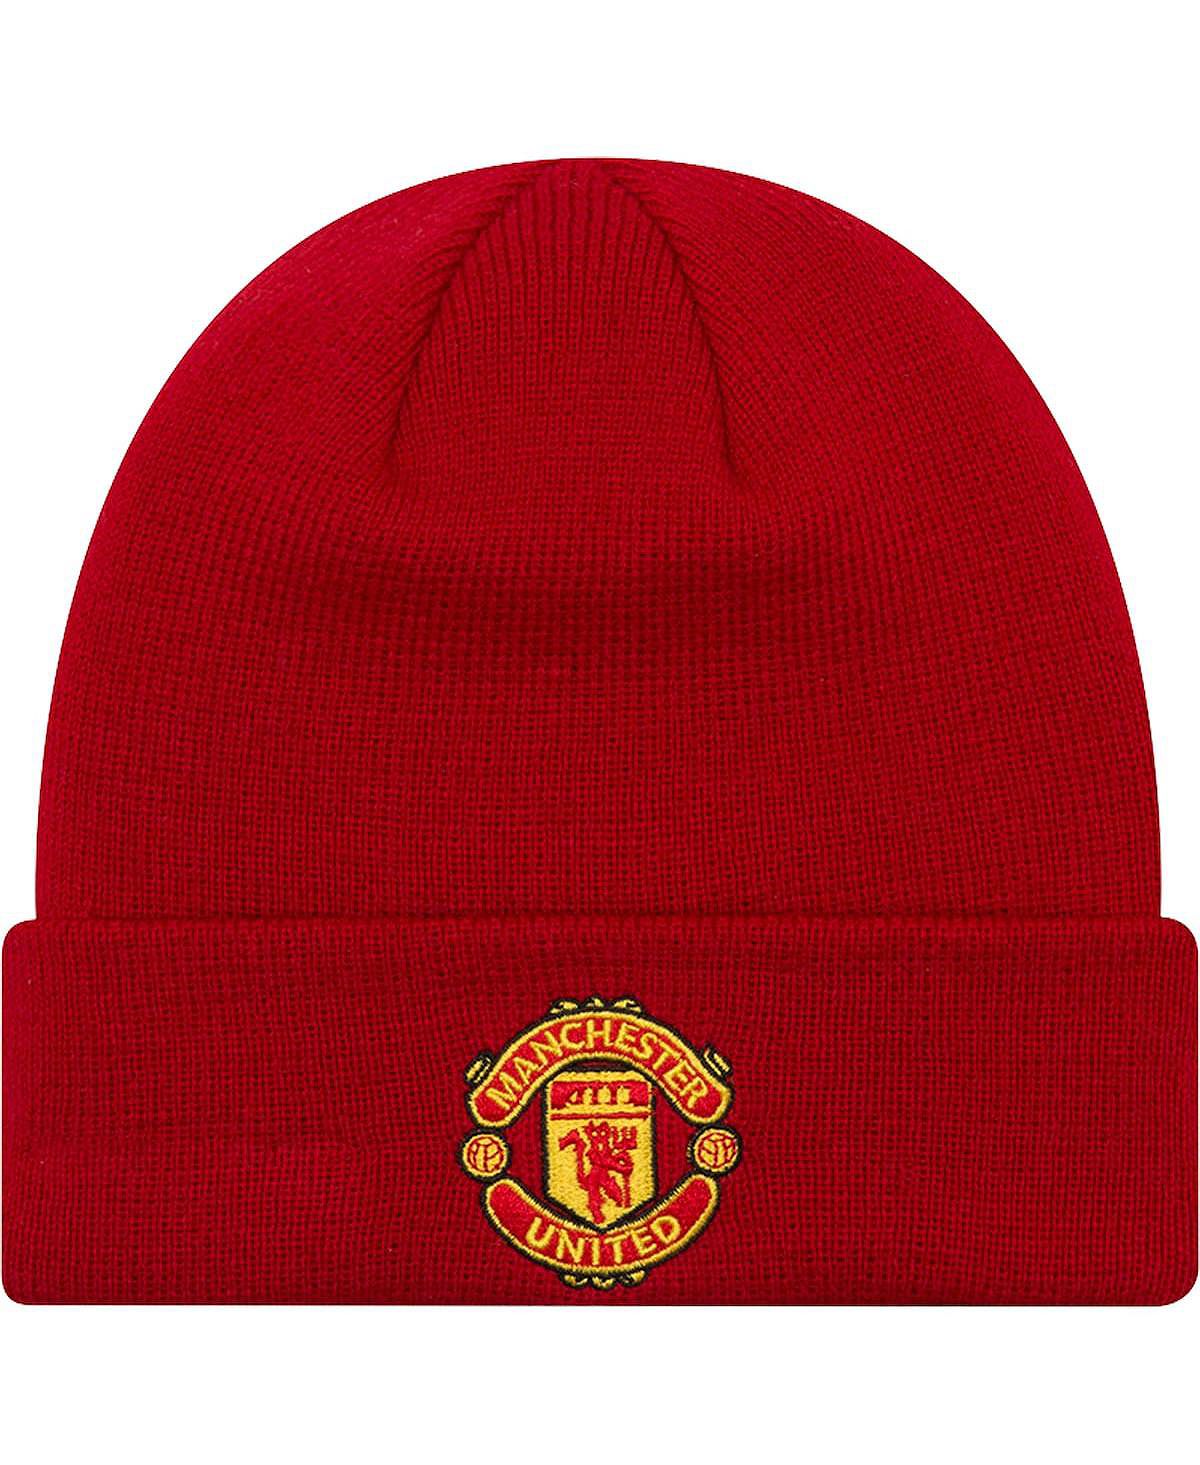 Красная вязаная шапка с манжетами для юношей Manchester United Essential New Era